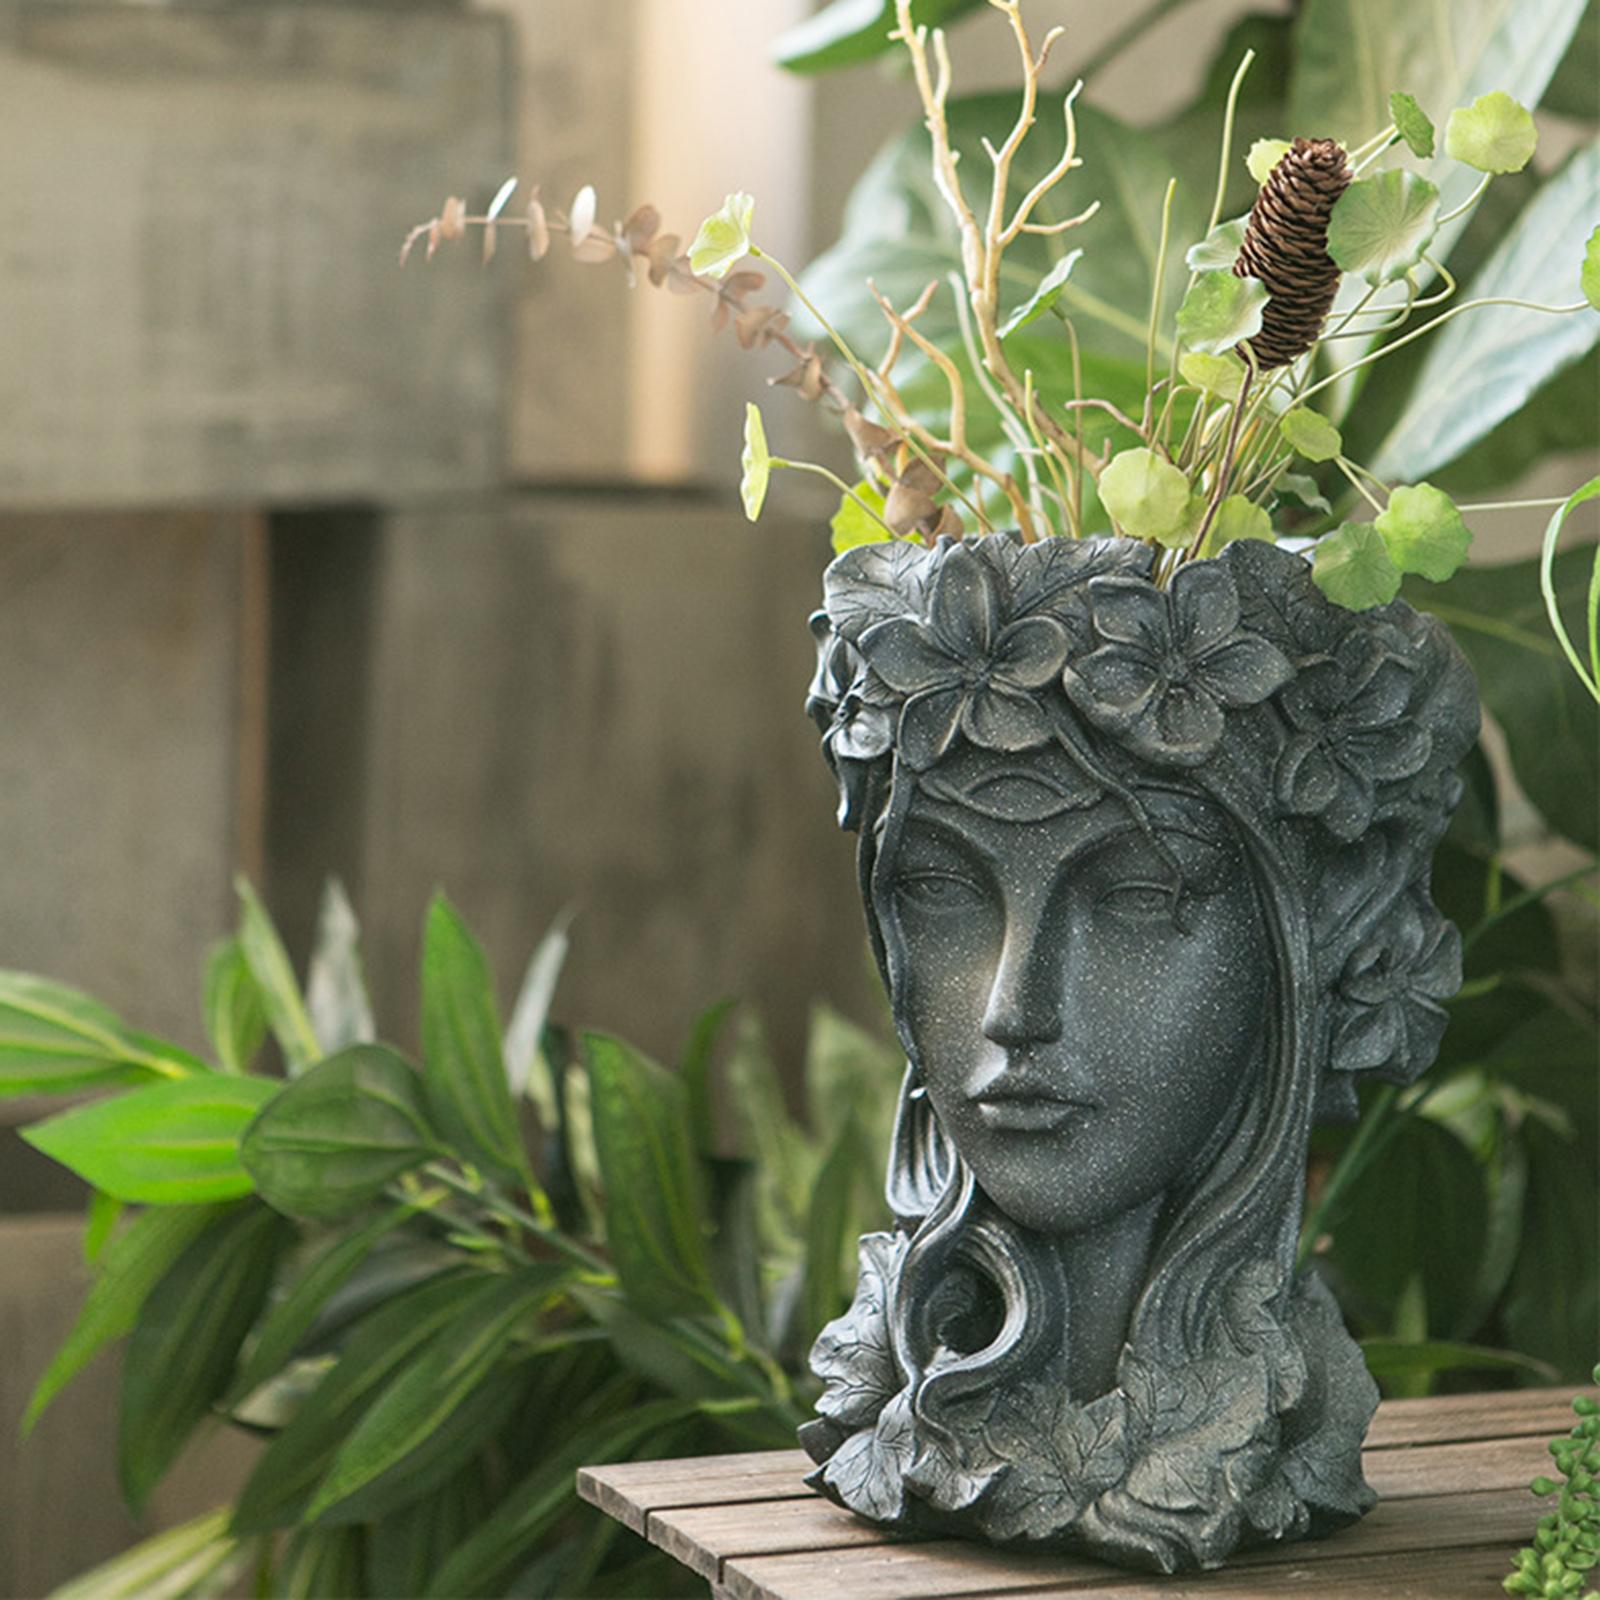 Resin Goddess Head Planter Flower Pot Beauty Face Figurine Ornament Decorative Plants Container Home Garden Patio Yard Decoration